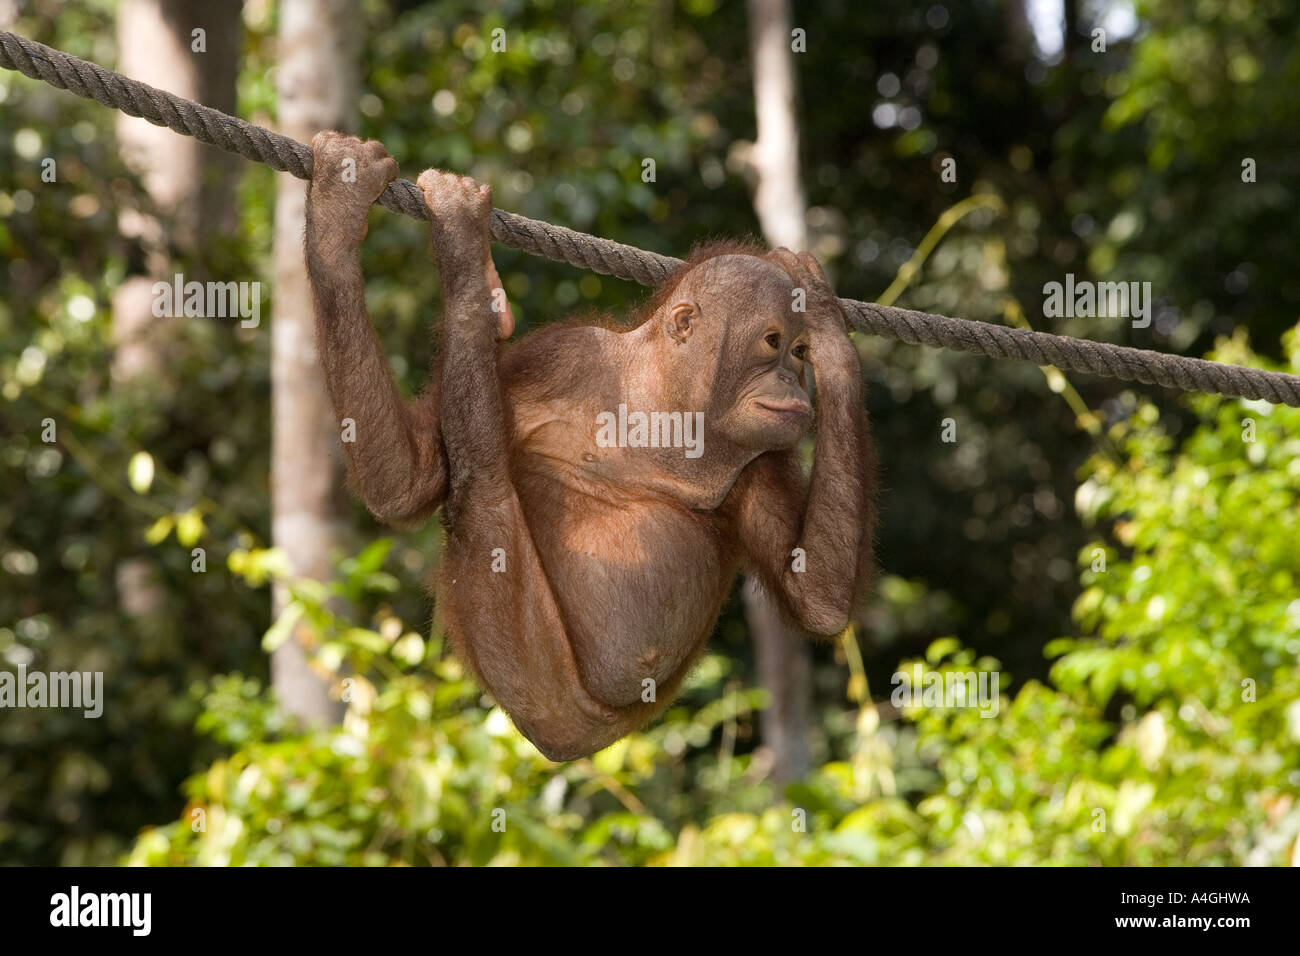 Malaysia Borneo Sabah Sepilok Primaten junger Orang-Utang Pongo Pygmaeus am Seil Stockfoto